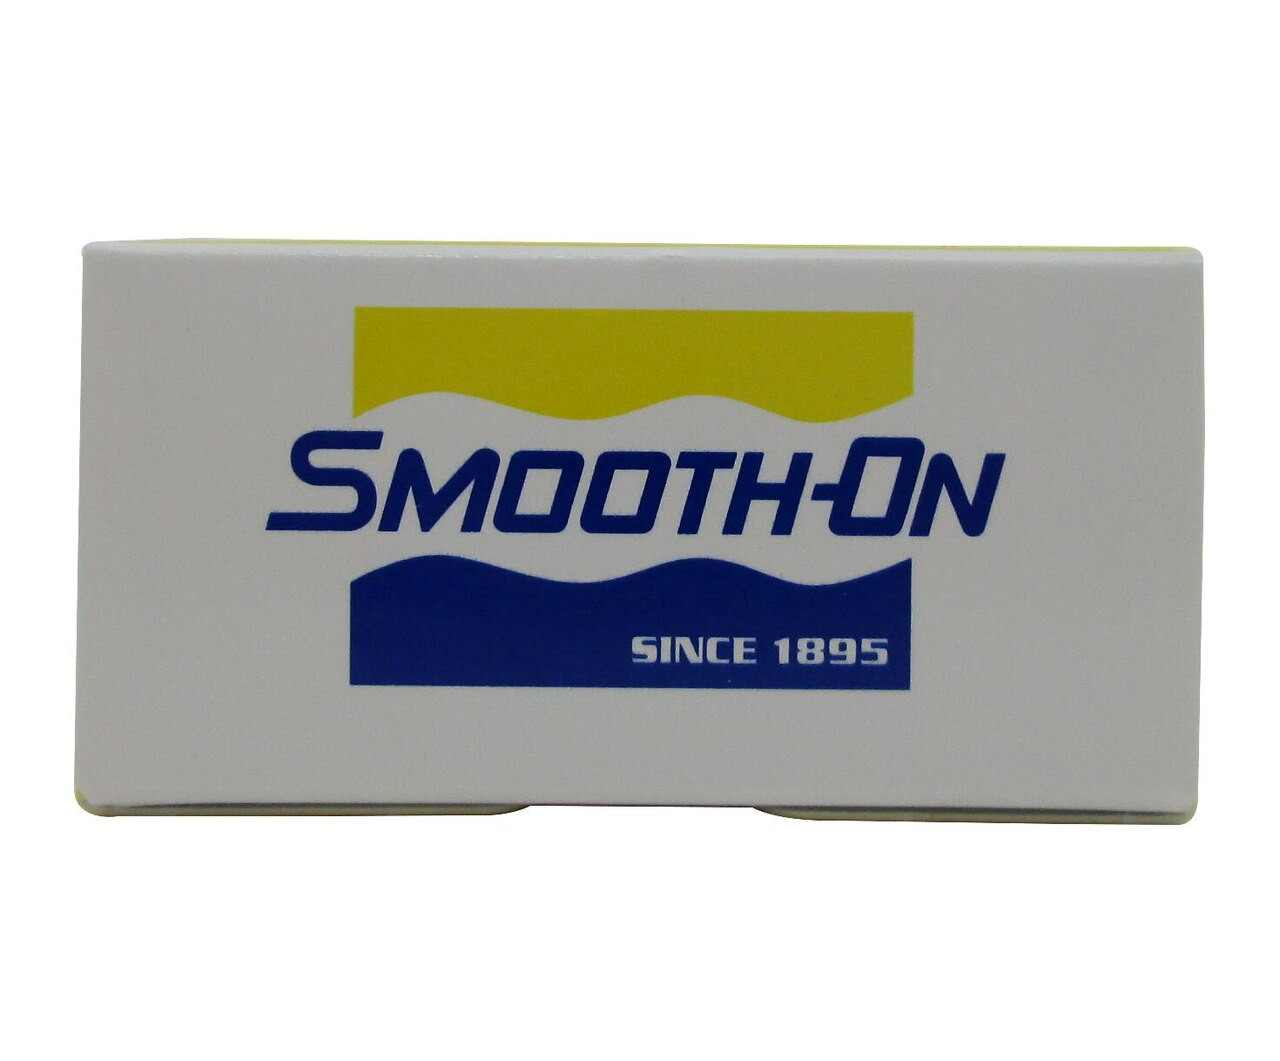 Smooth-On 01022 A4 Metalset Aluminum Filled Epoxy Adhesive - 6 oz Kit